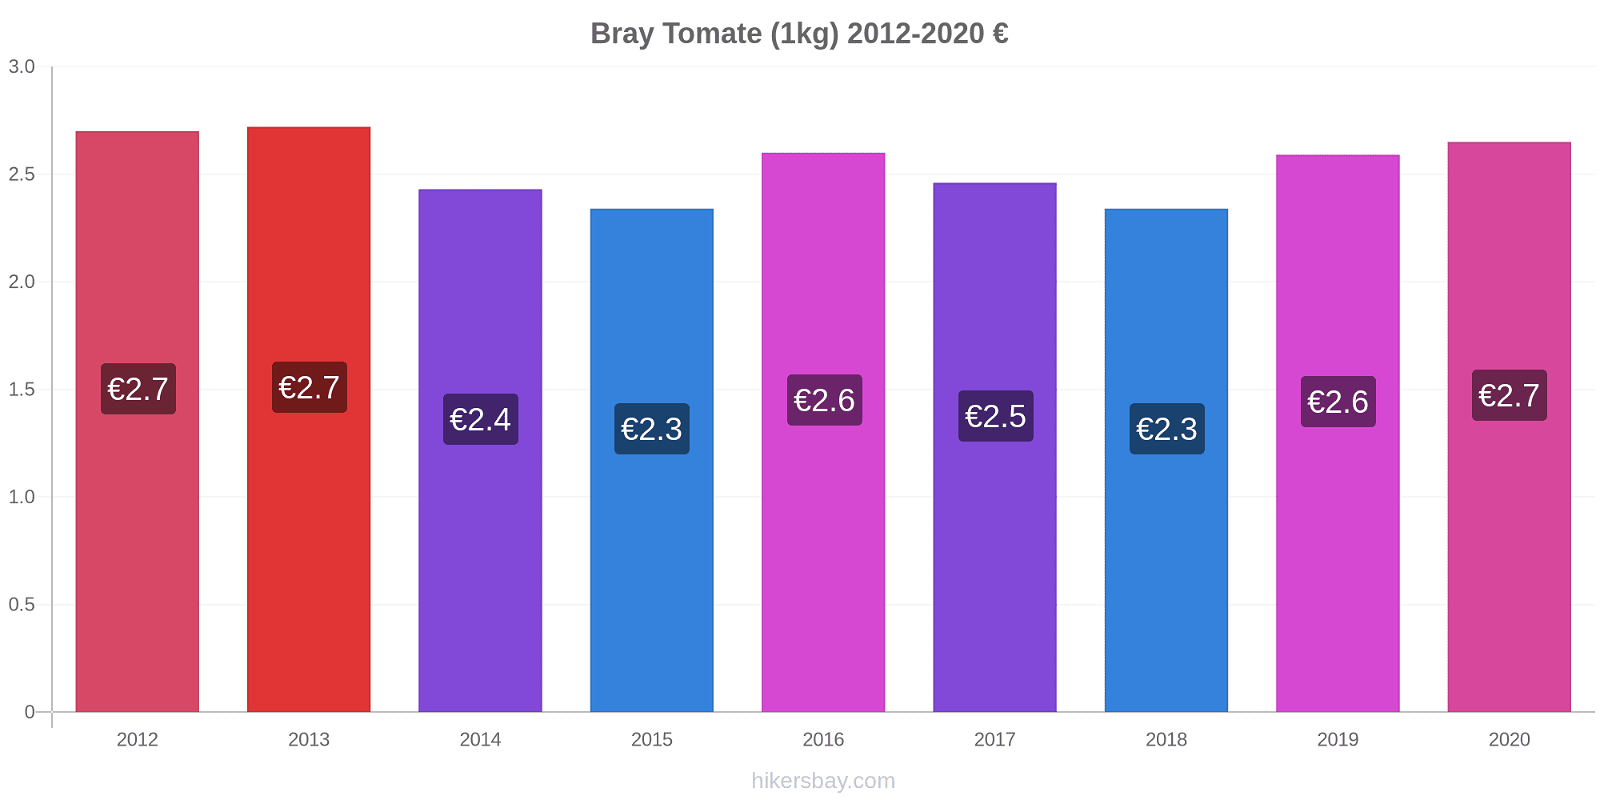 Bray Preisänderungen Tomaten (1kg) hikersbay.com